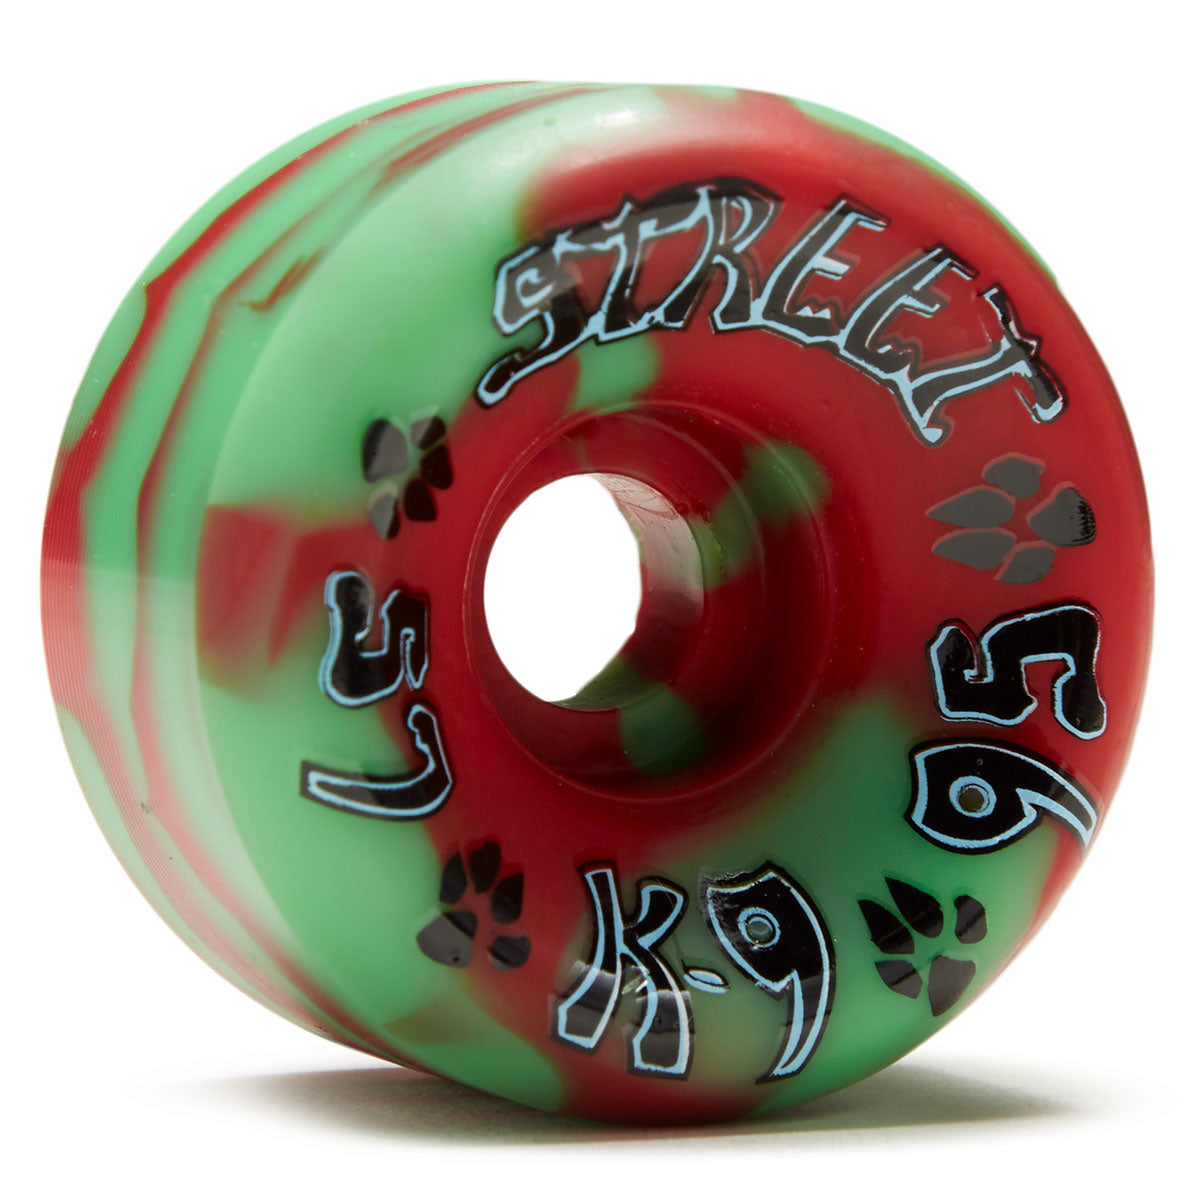 Dogtown K-9 95a Skateboard Wheels - Red/Green Swirl - 57mm image 1